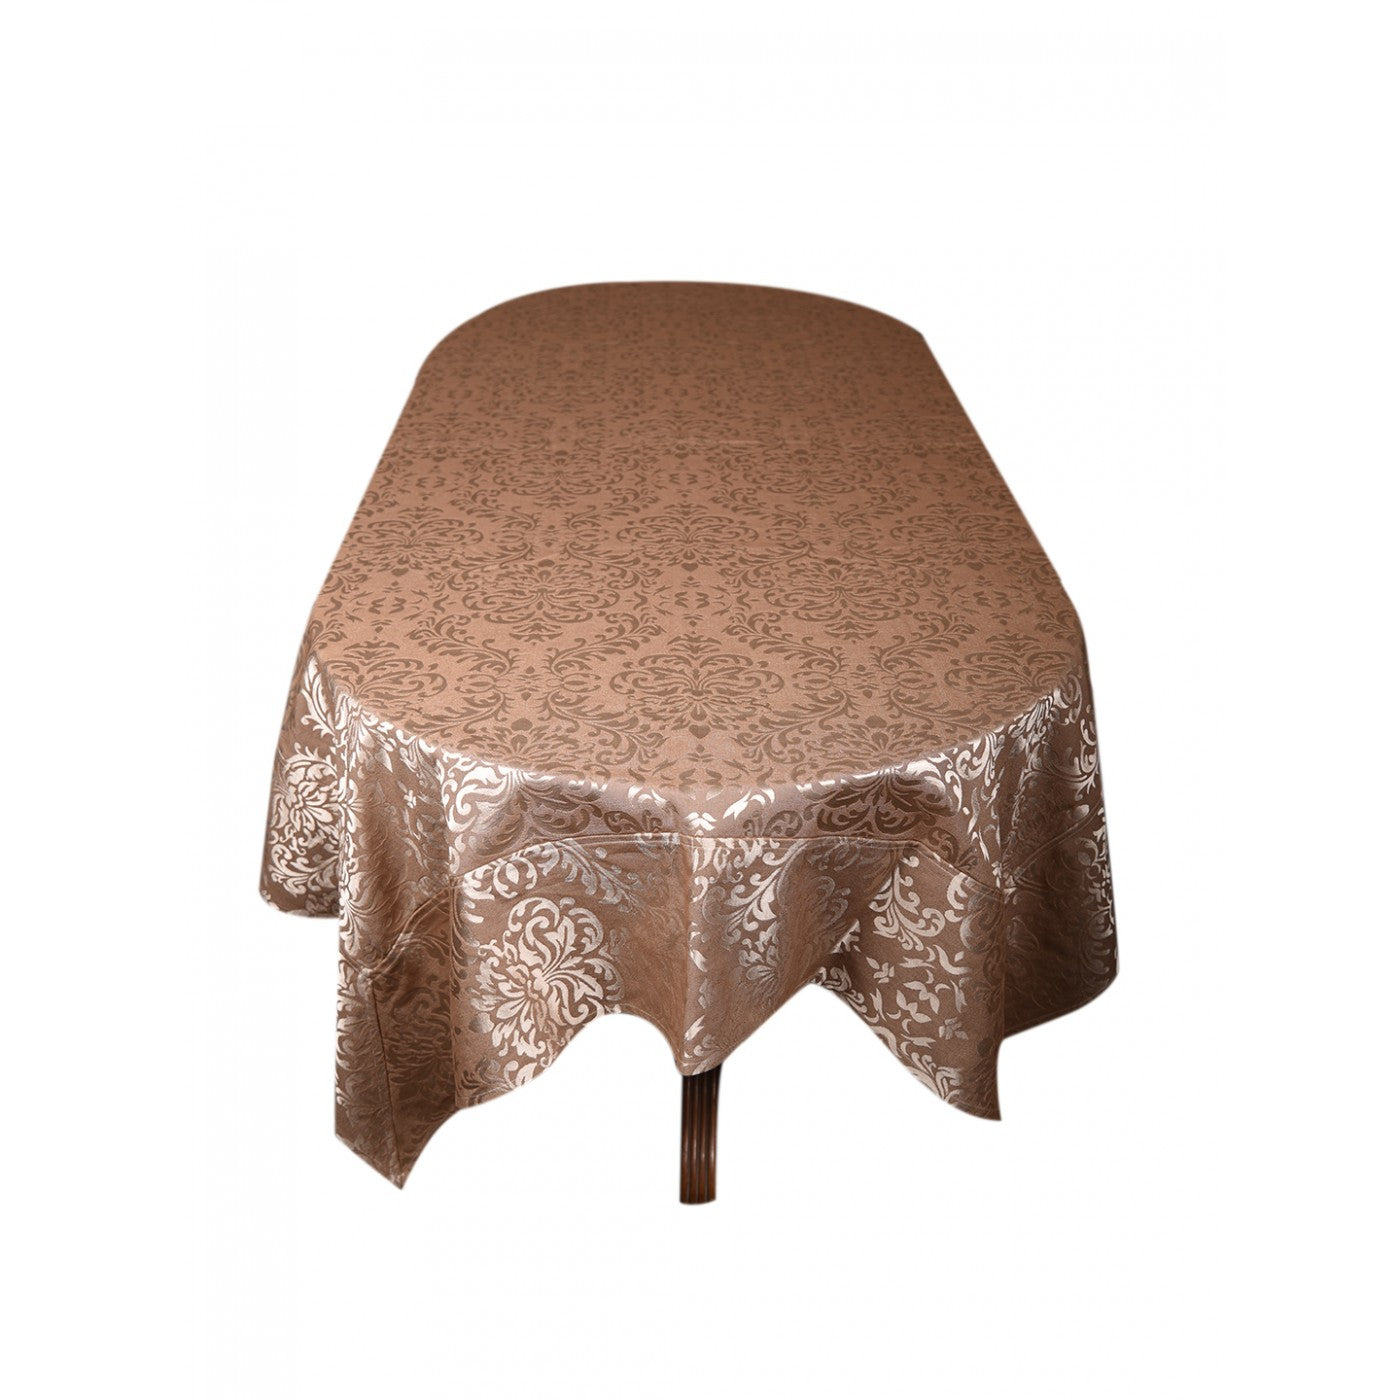 Elegant Harmony Damask Jacquard Dining Table Cover